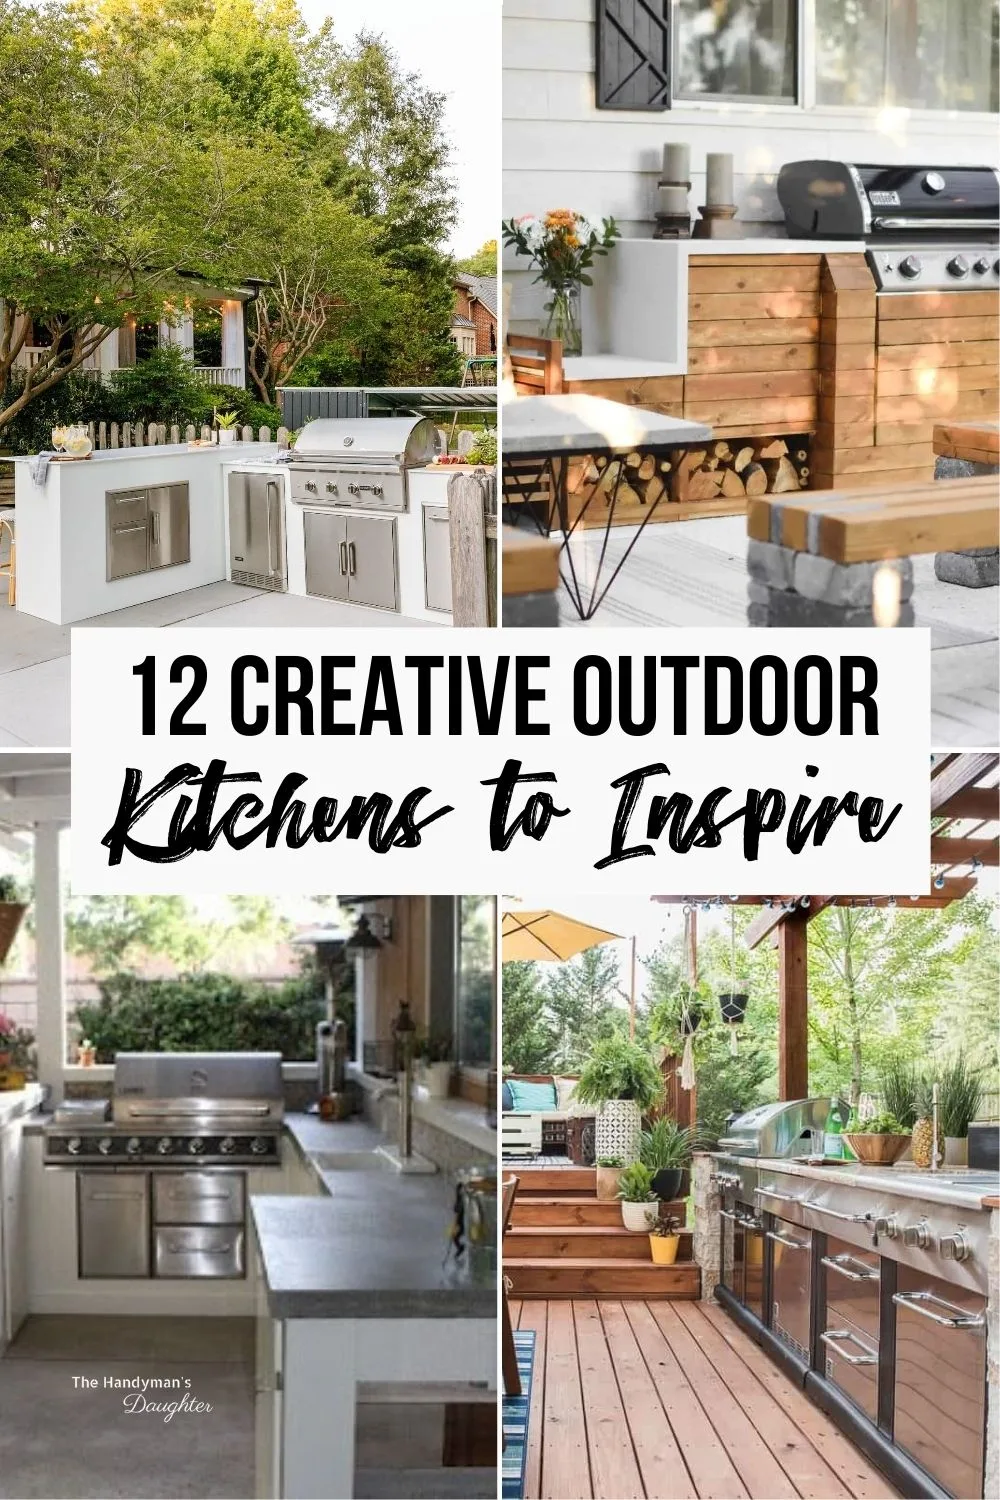 13 Creative Diy Outdoor Kitchen Ideas